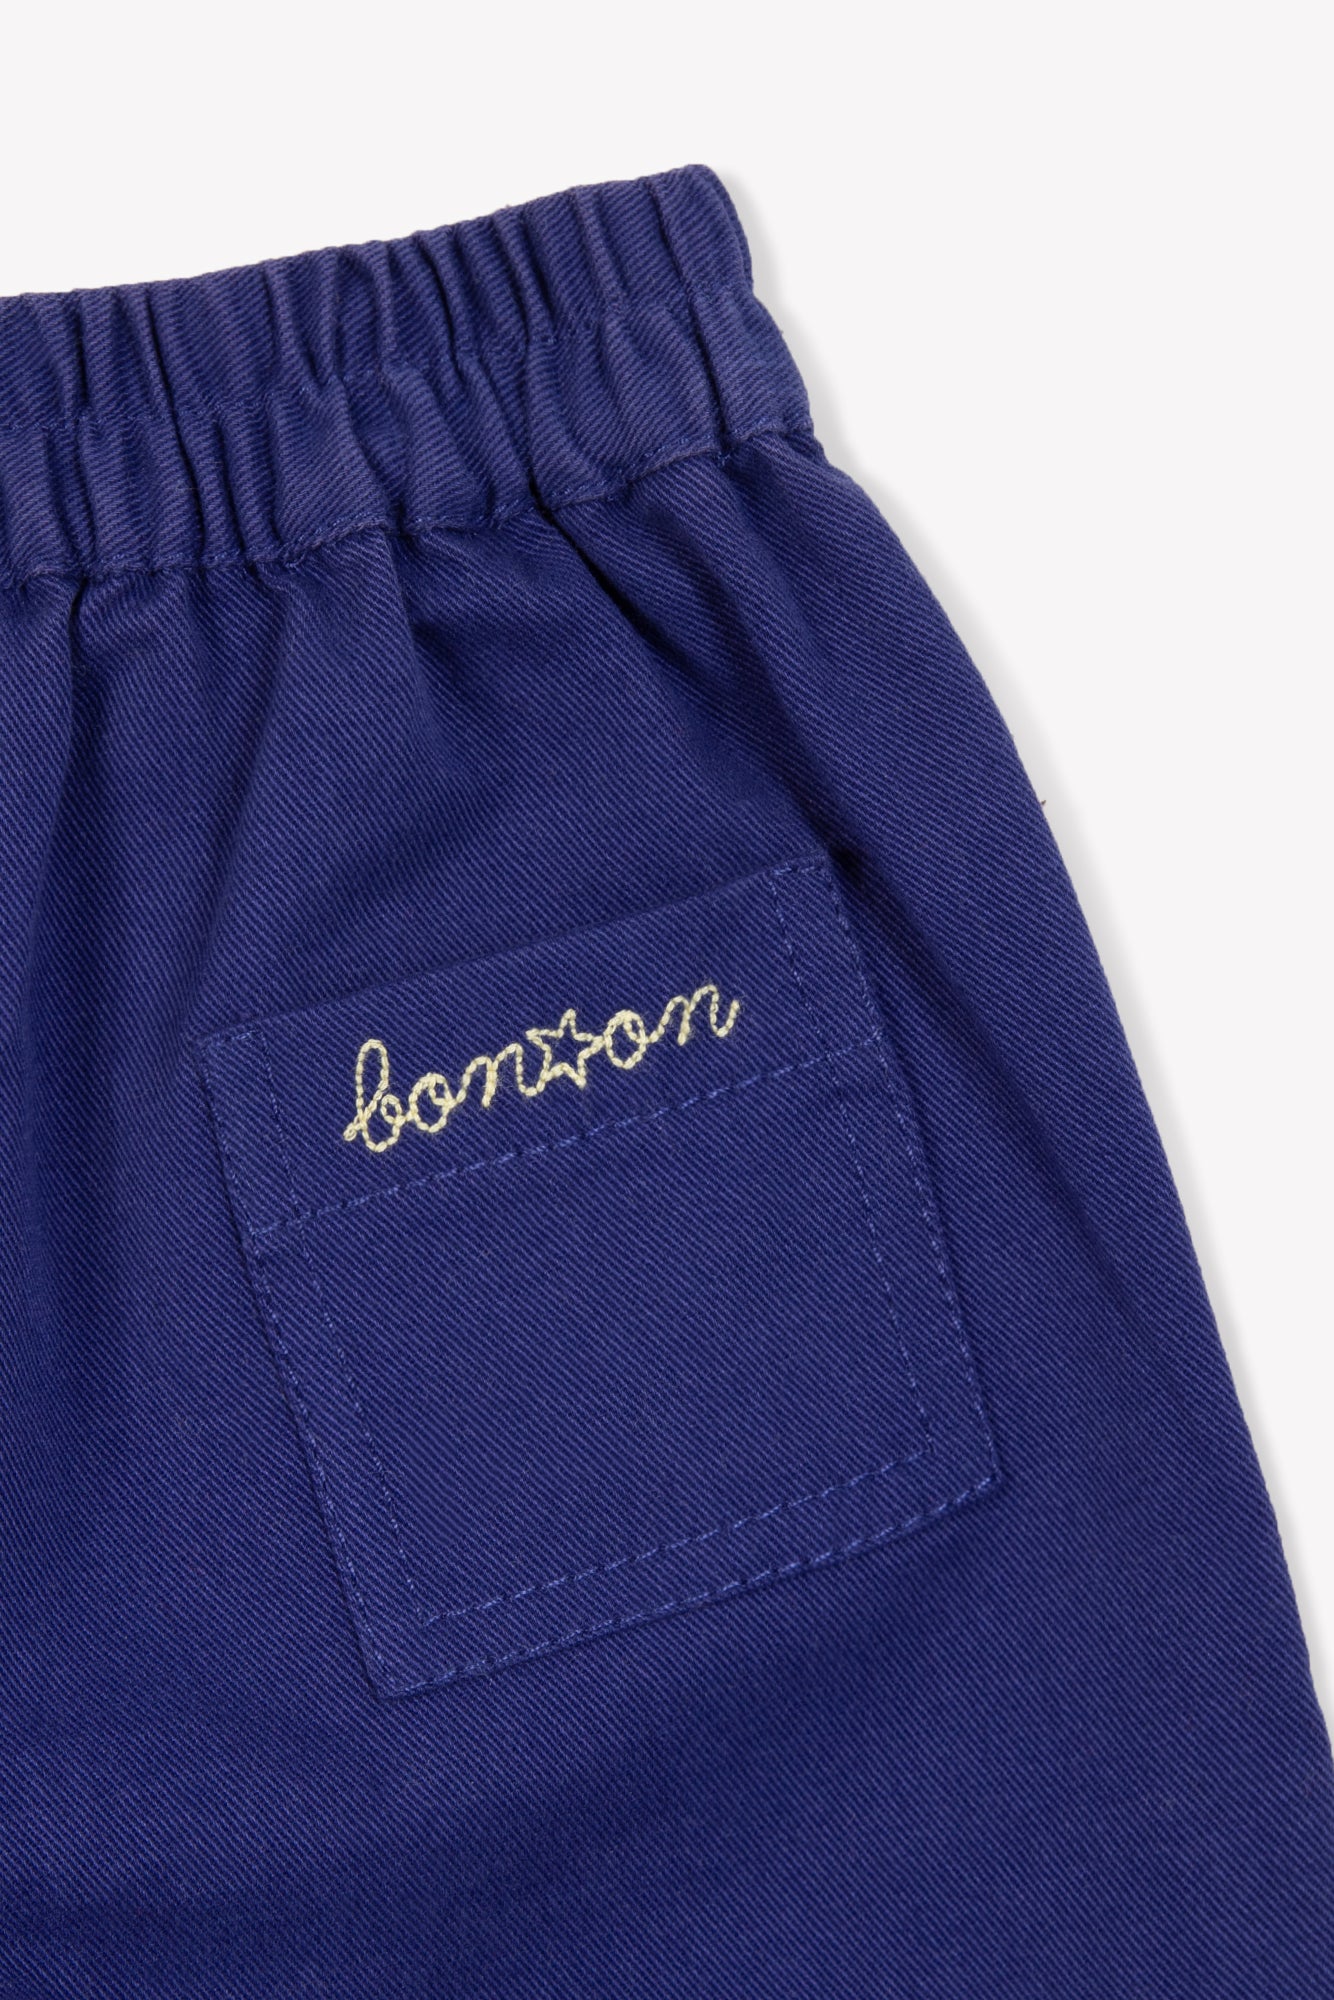 Pantalon - Gino bleu Bébé coton base worker